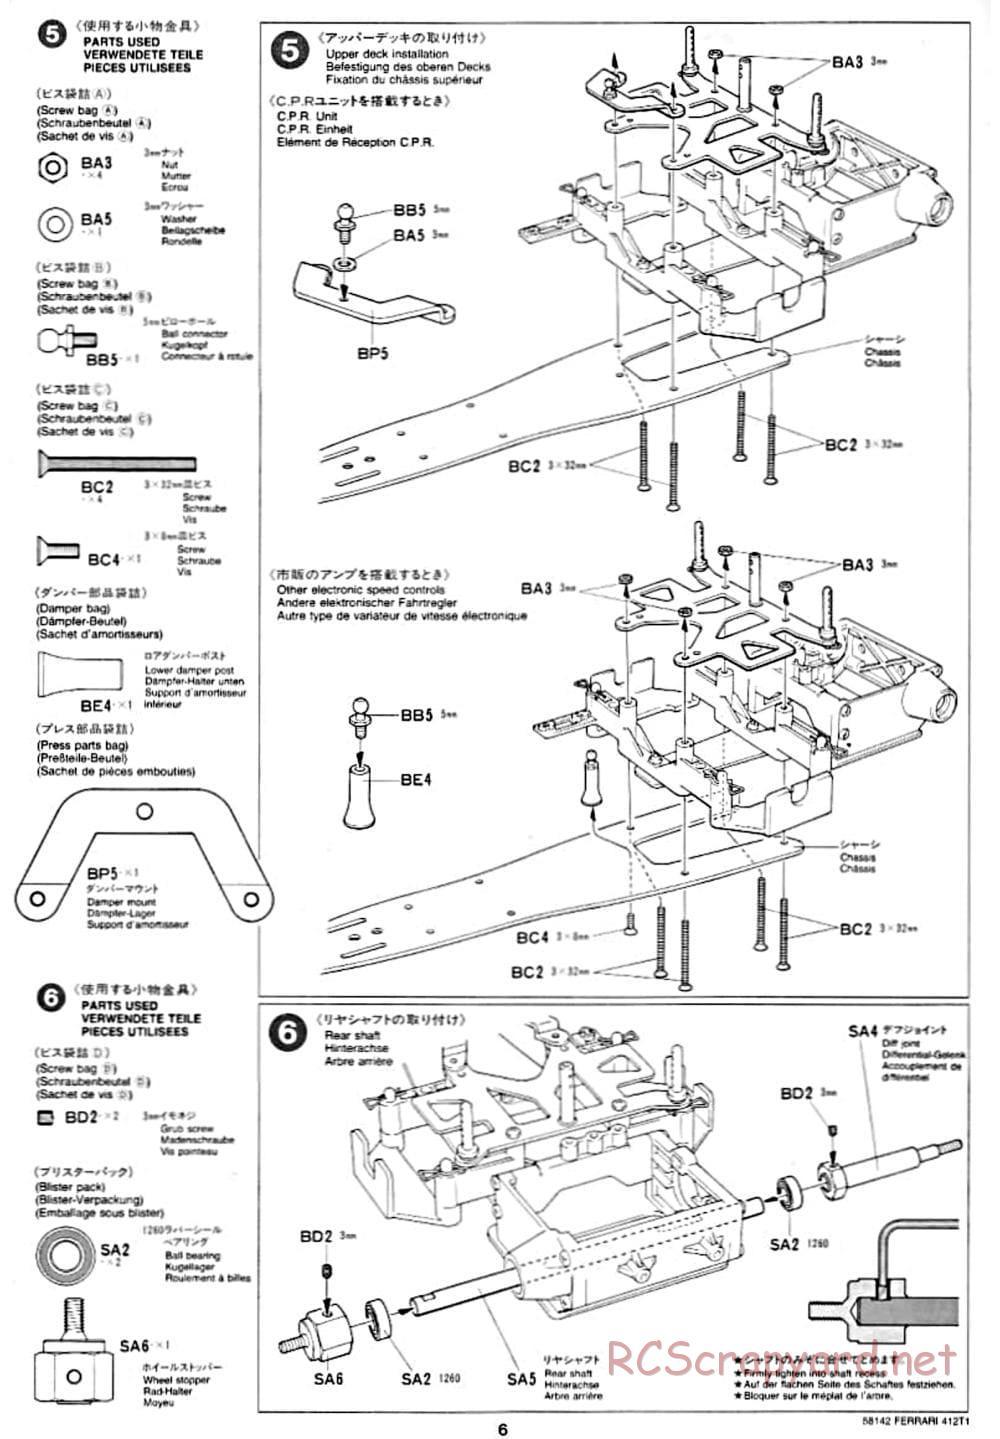 Tamiya - Ferrari 412T1 - F103 Chassis - Manual - Page 6